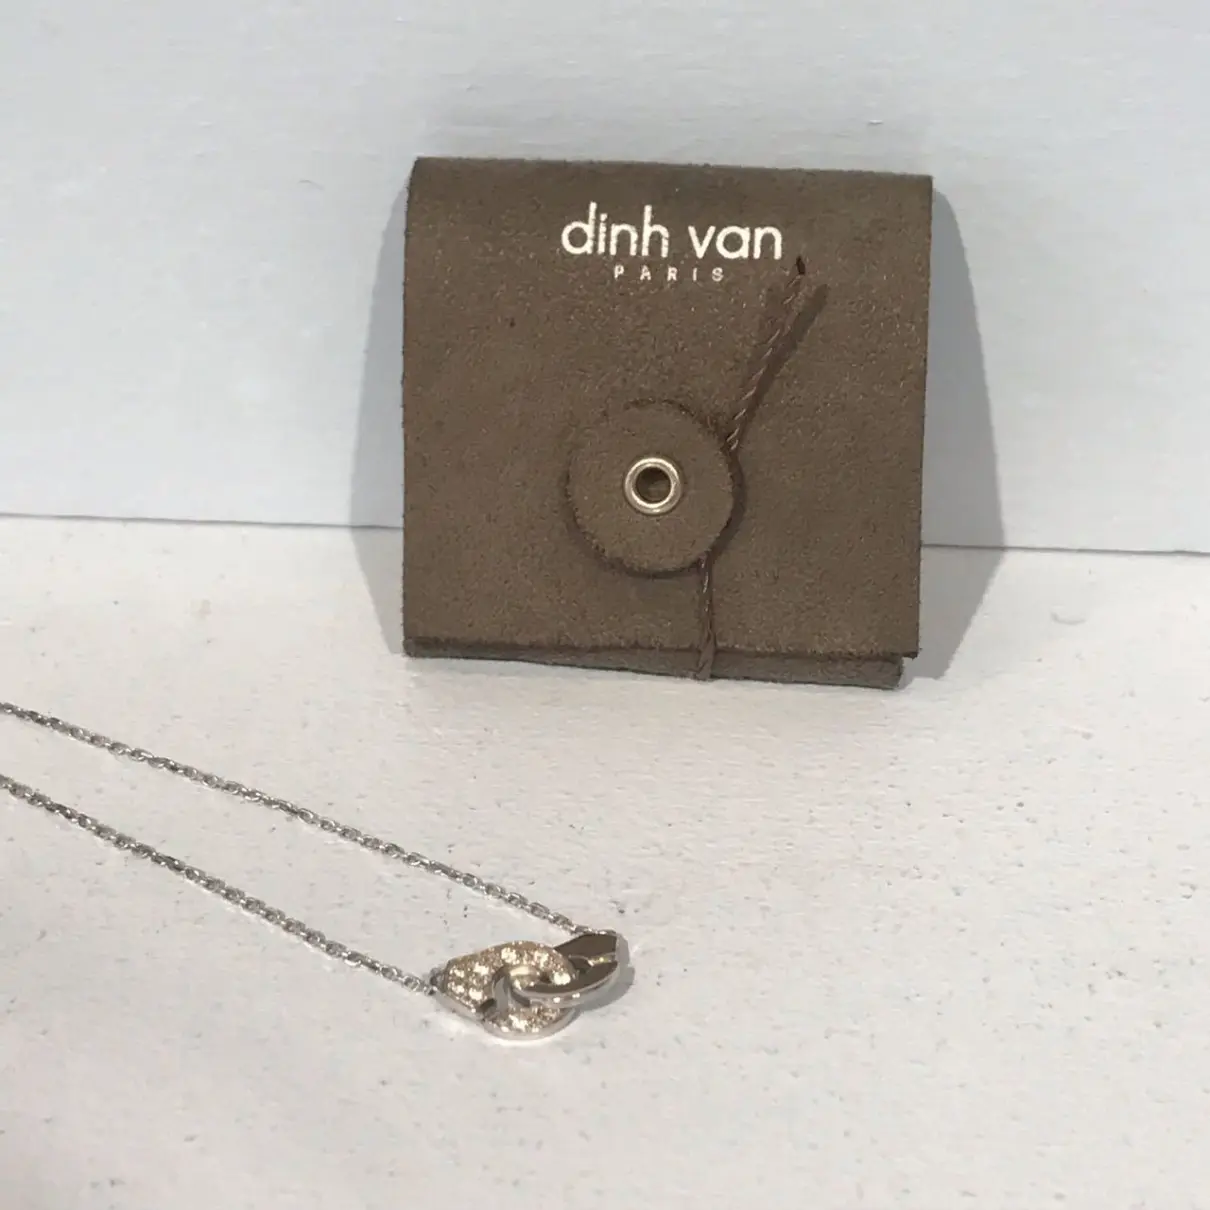 Buy Dinh Van Menottes white gold necklace online